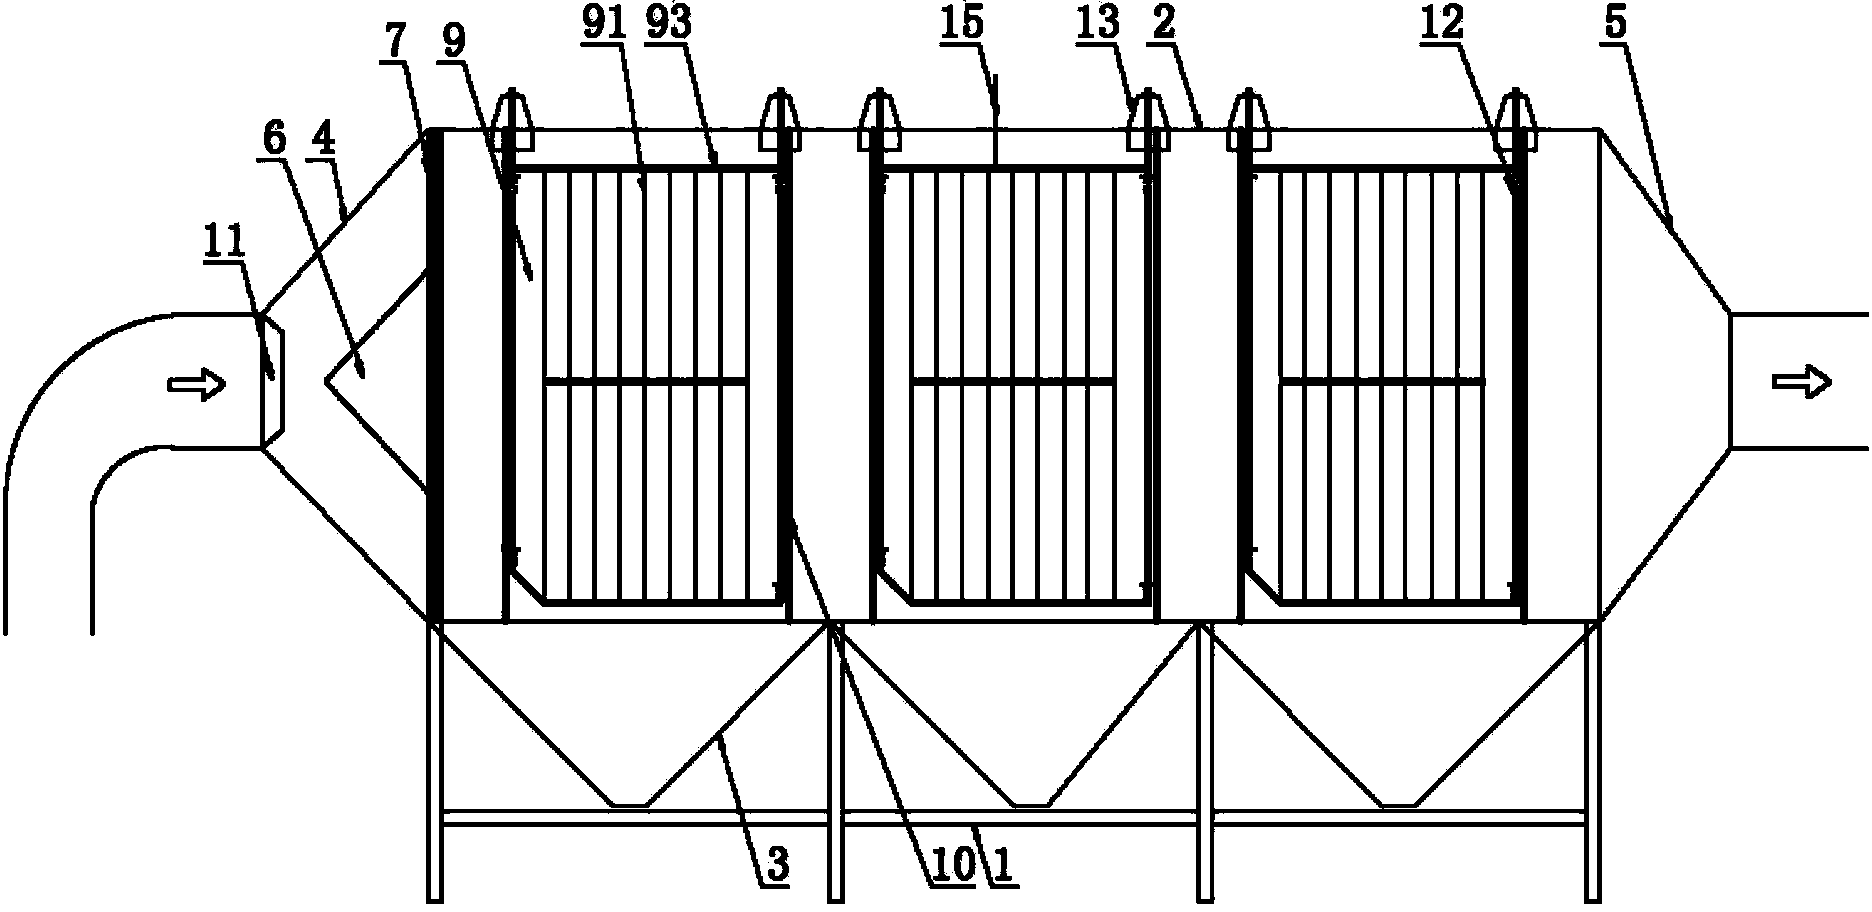 Horizontal electrostatic precipitator